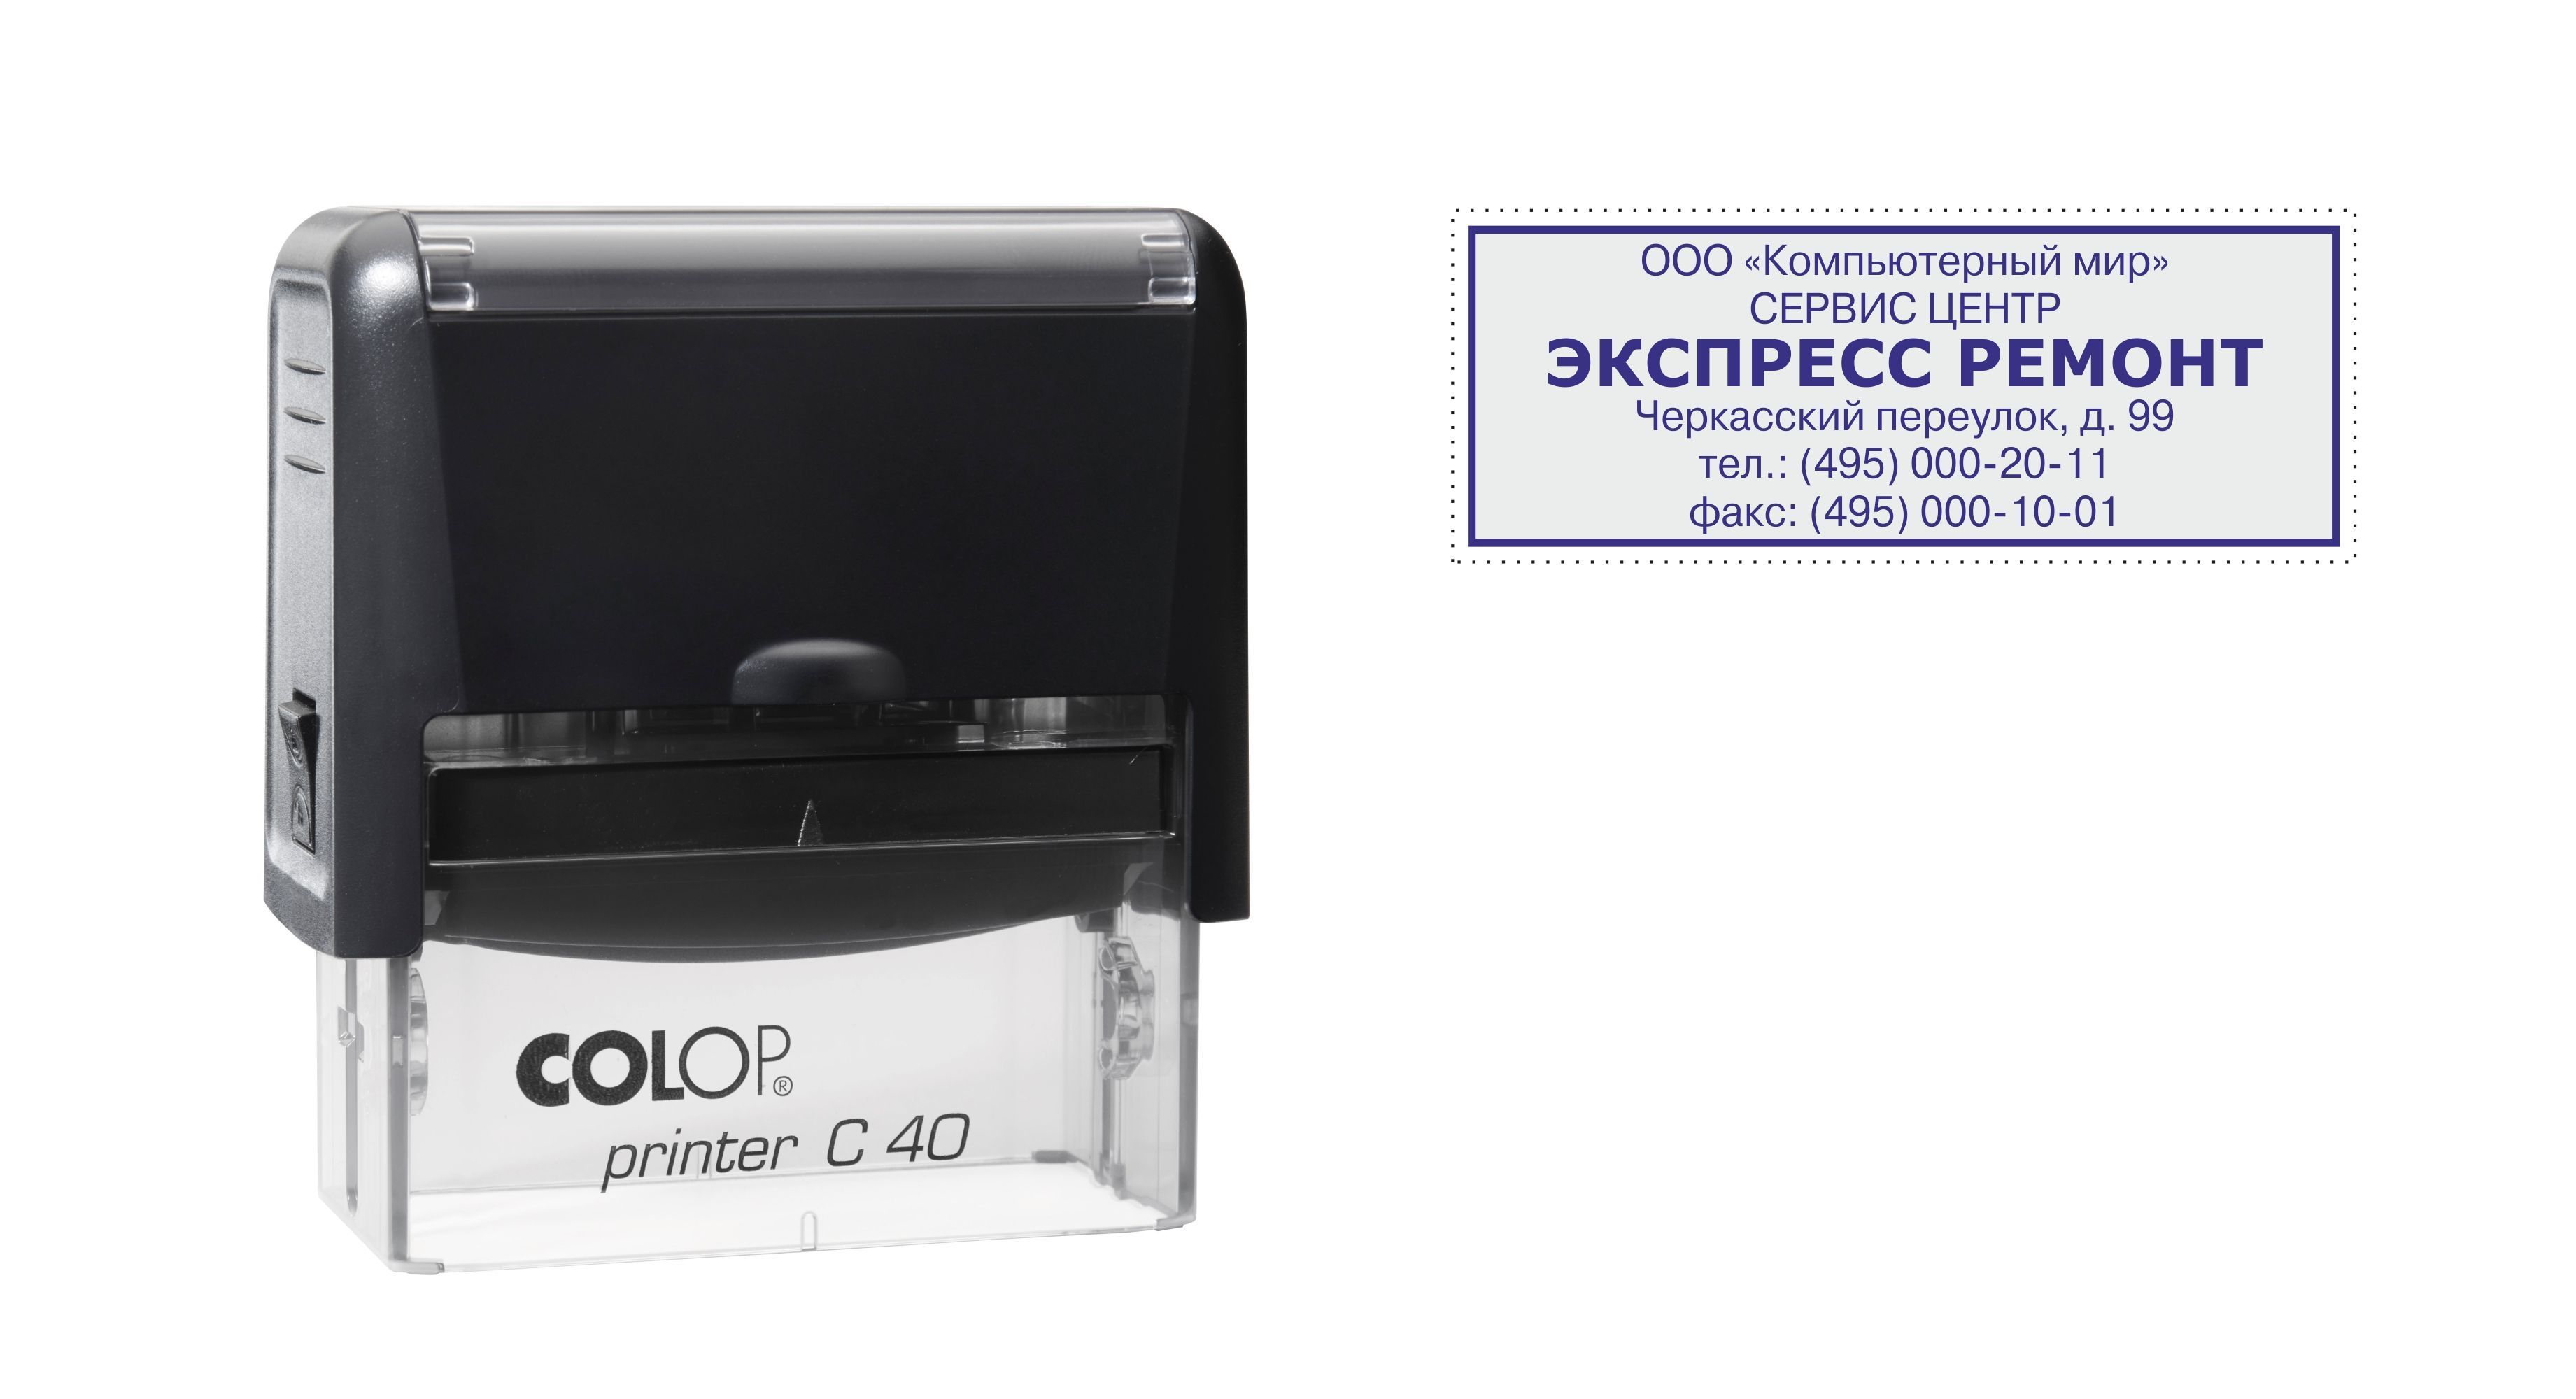    Printer 40 Compact  5923  